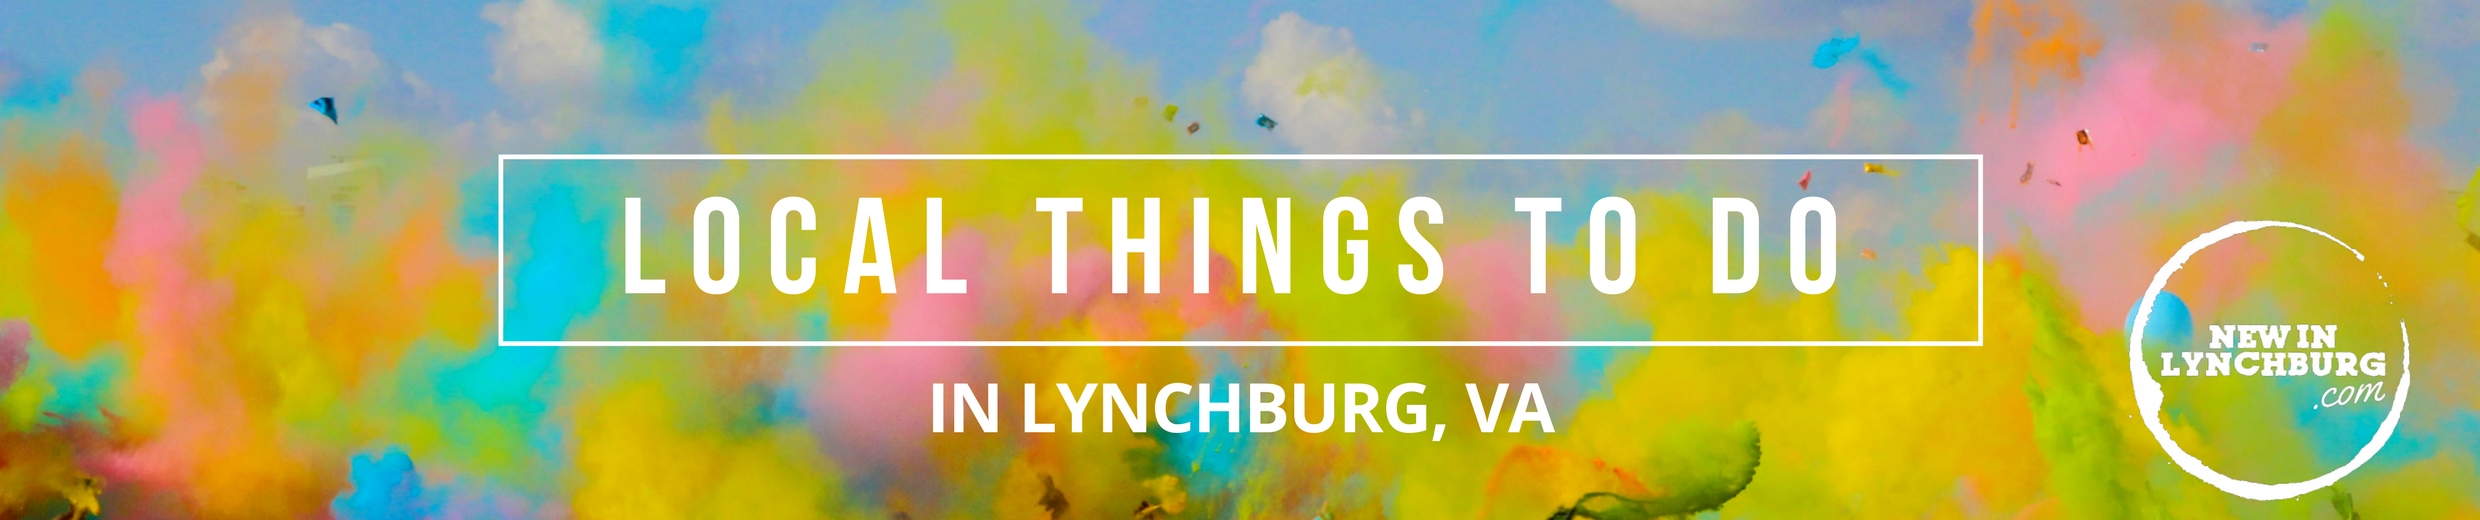 Things to do in Lynchburg, VA